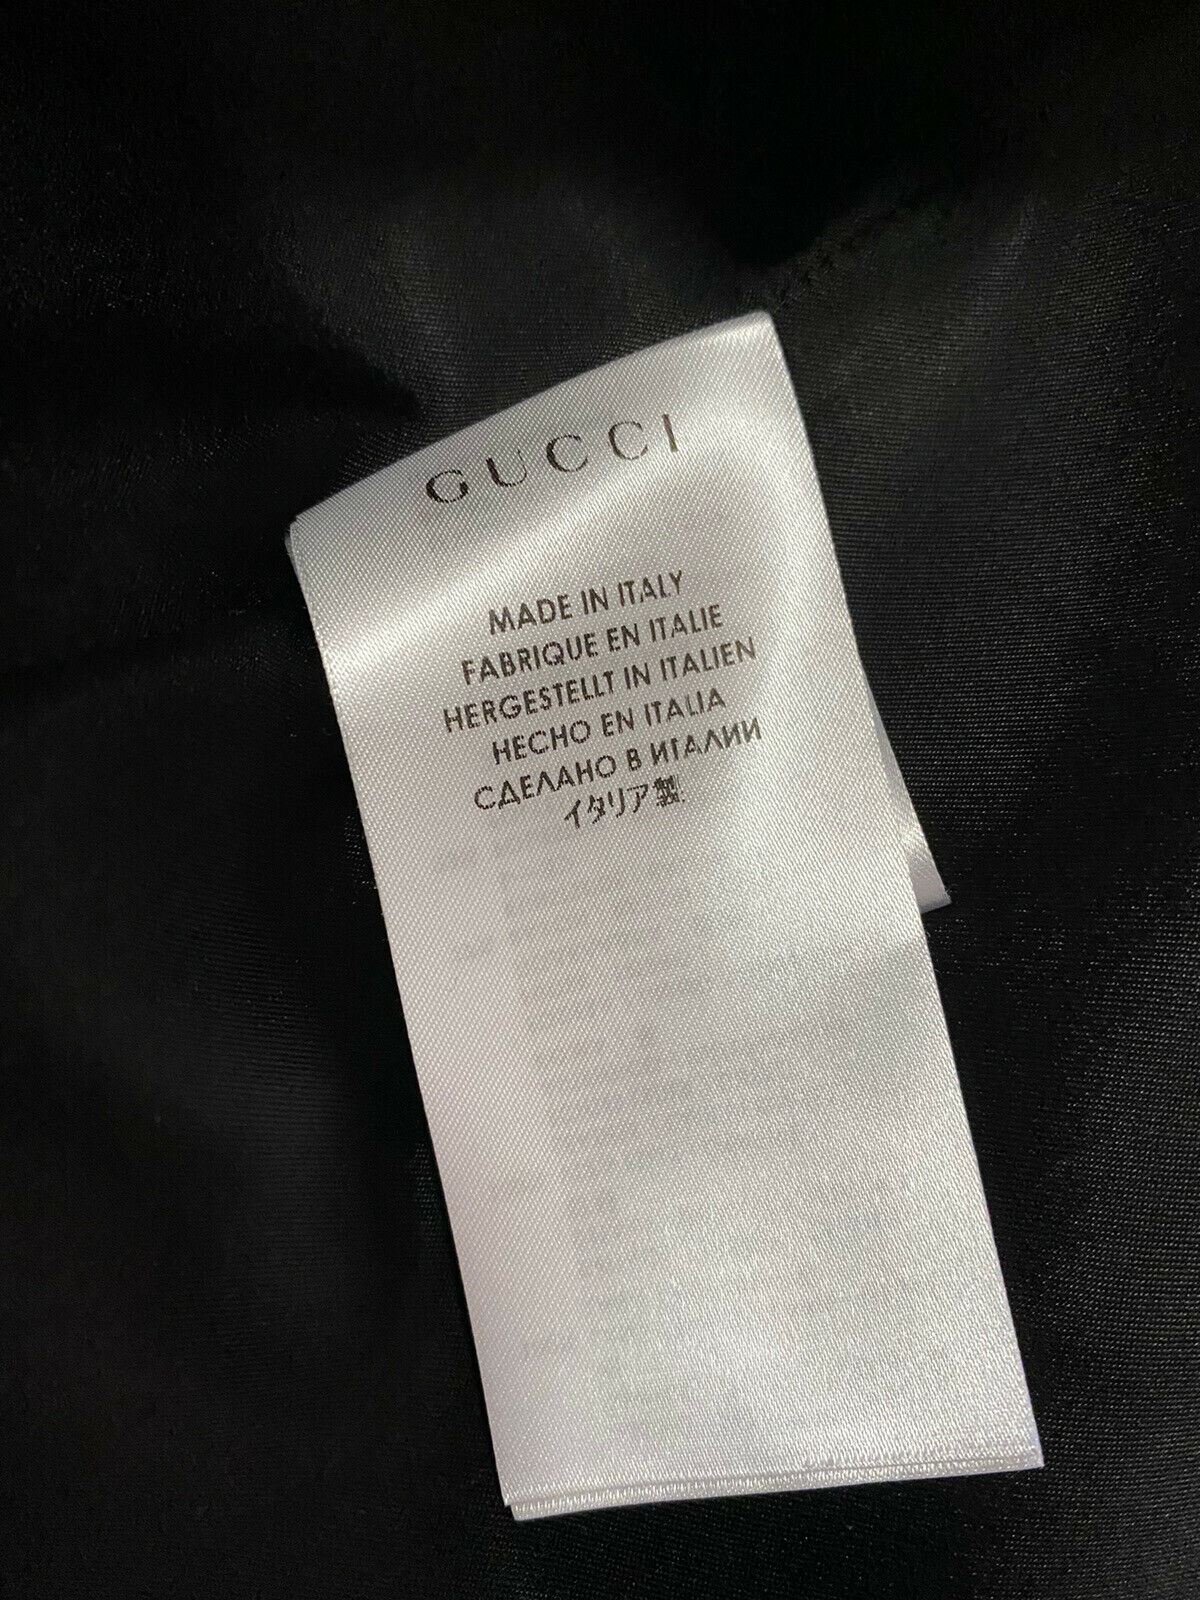 5850 $ Gucci Damen-Mantel aus Wolle/Leder, Lila, Größe 12 US/46, Italien